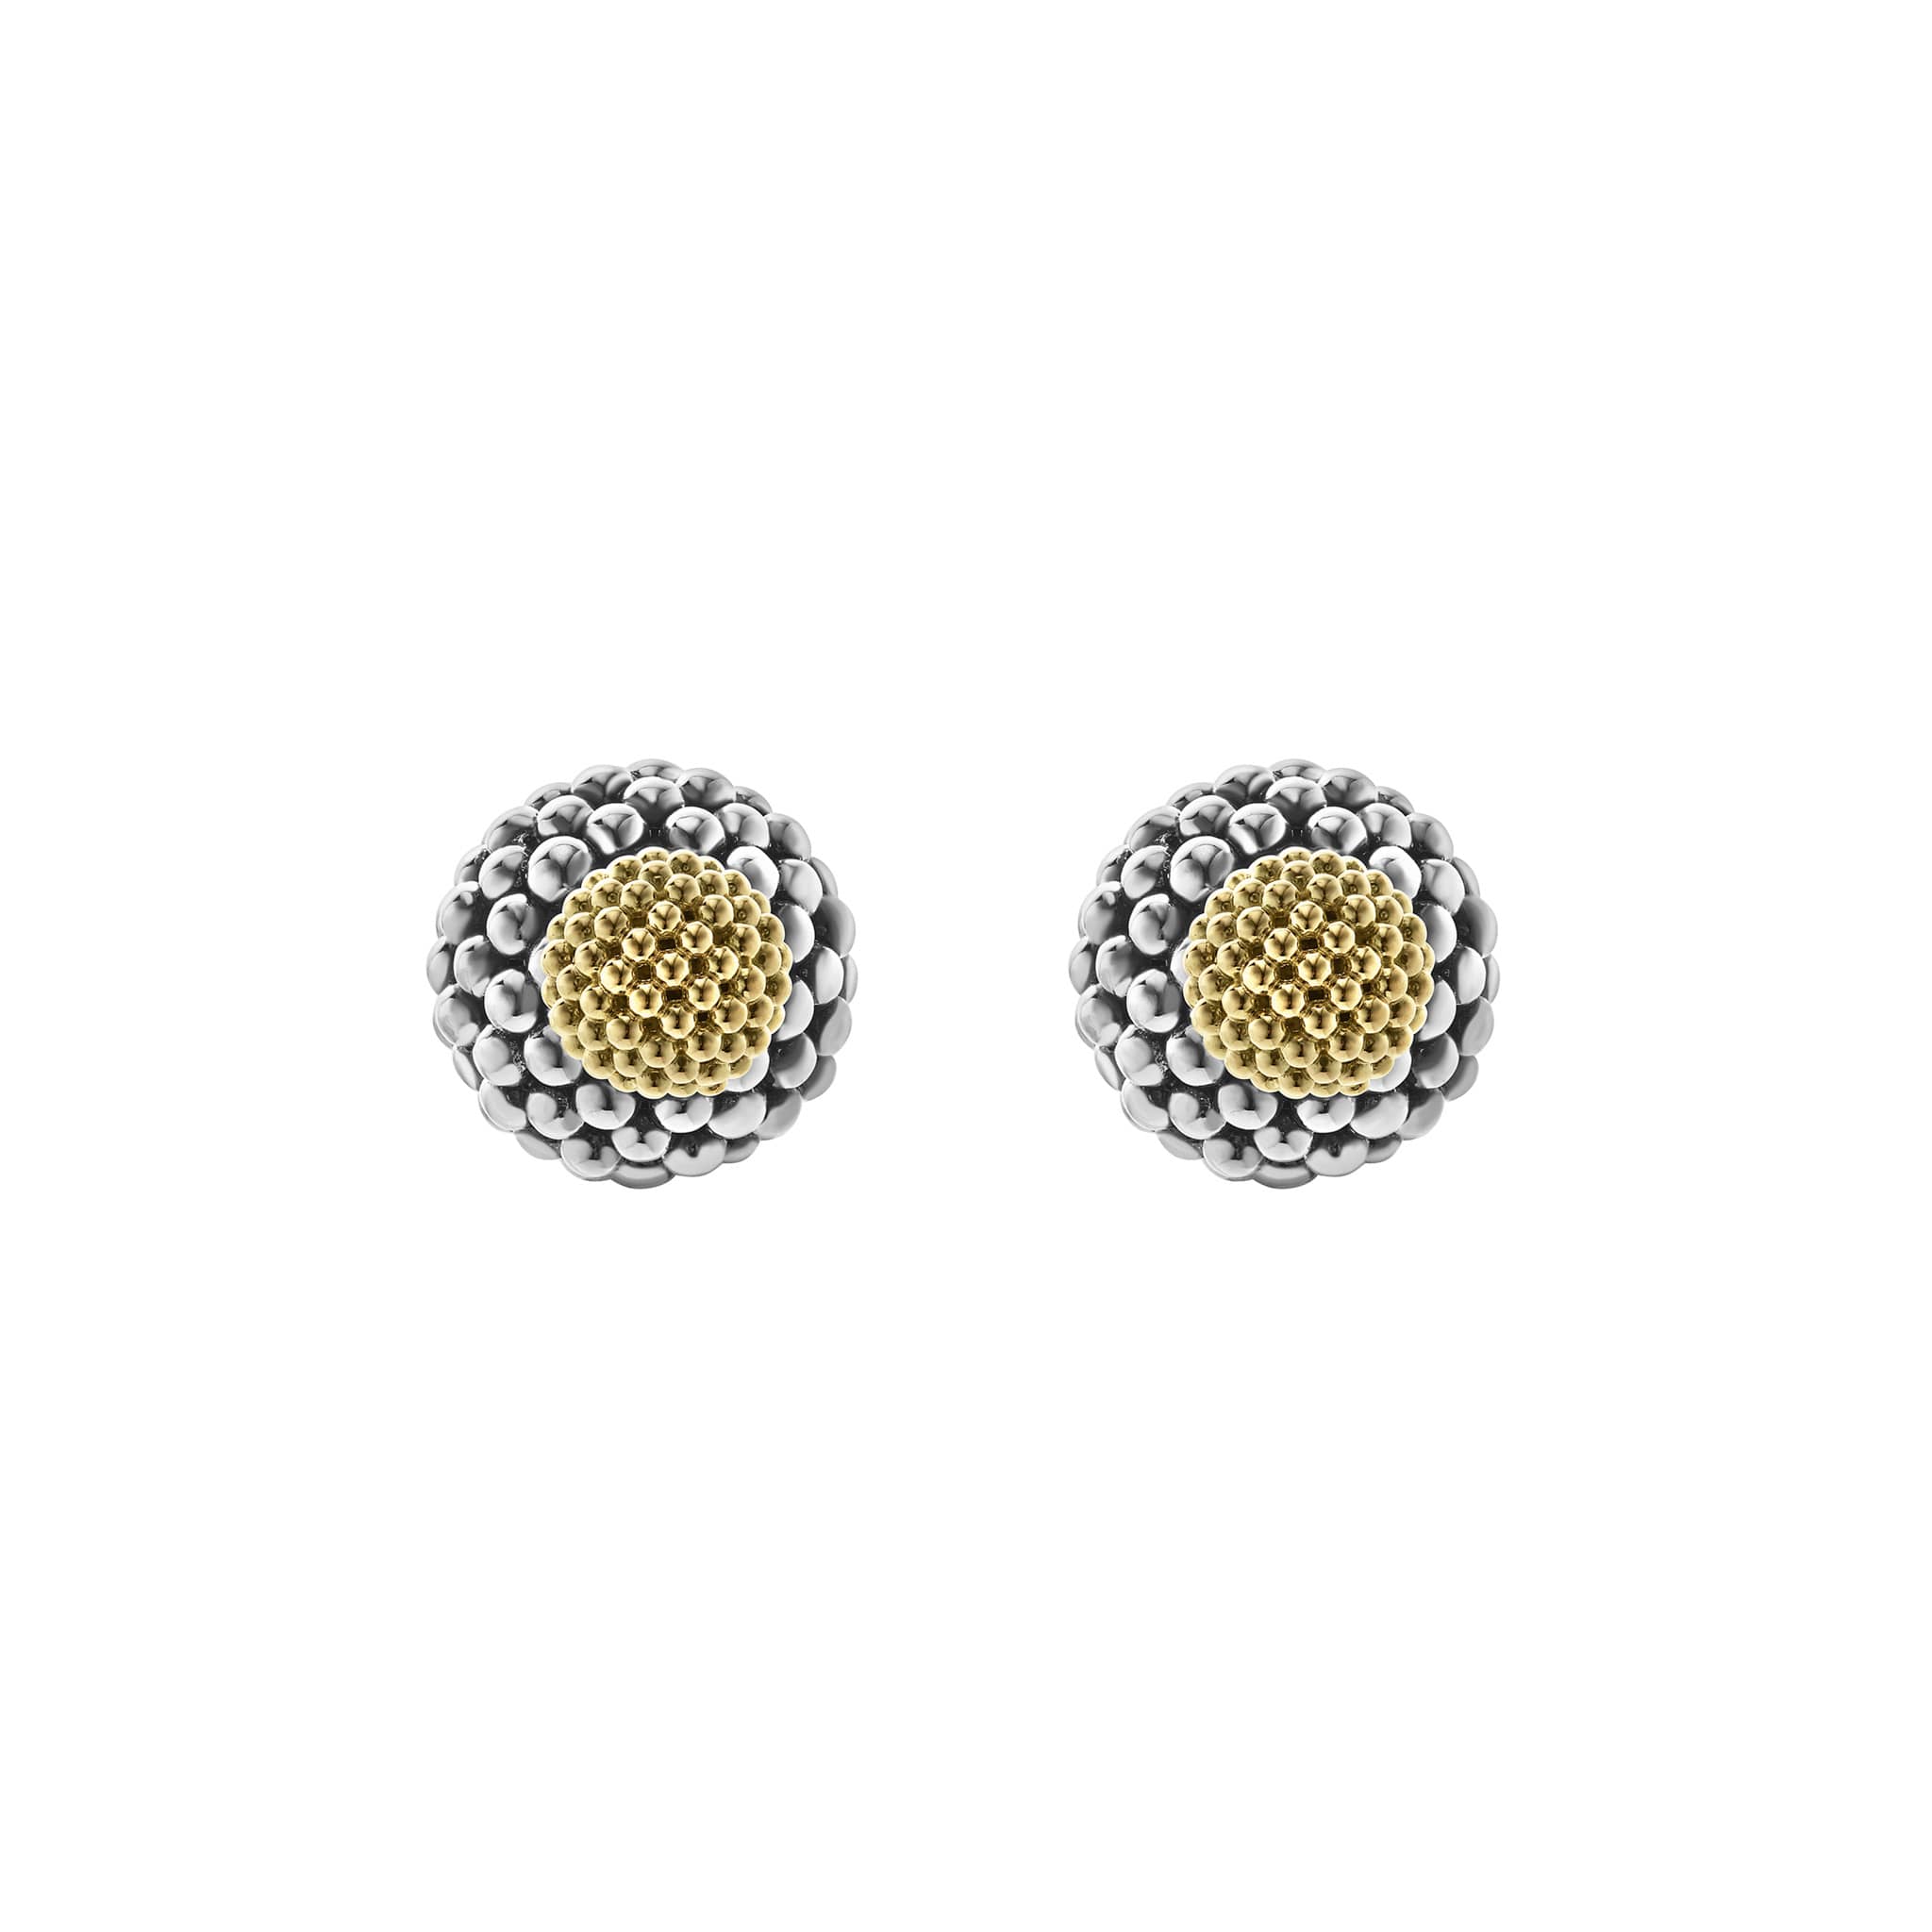 Pearl Front-Back Earrings, Signature Caviar